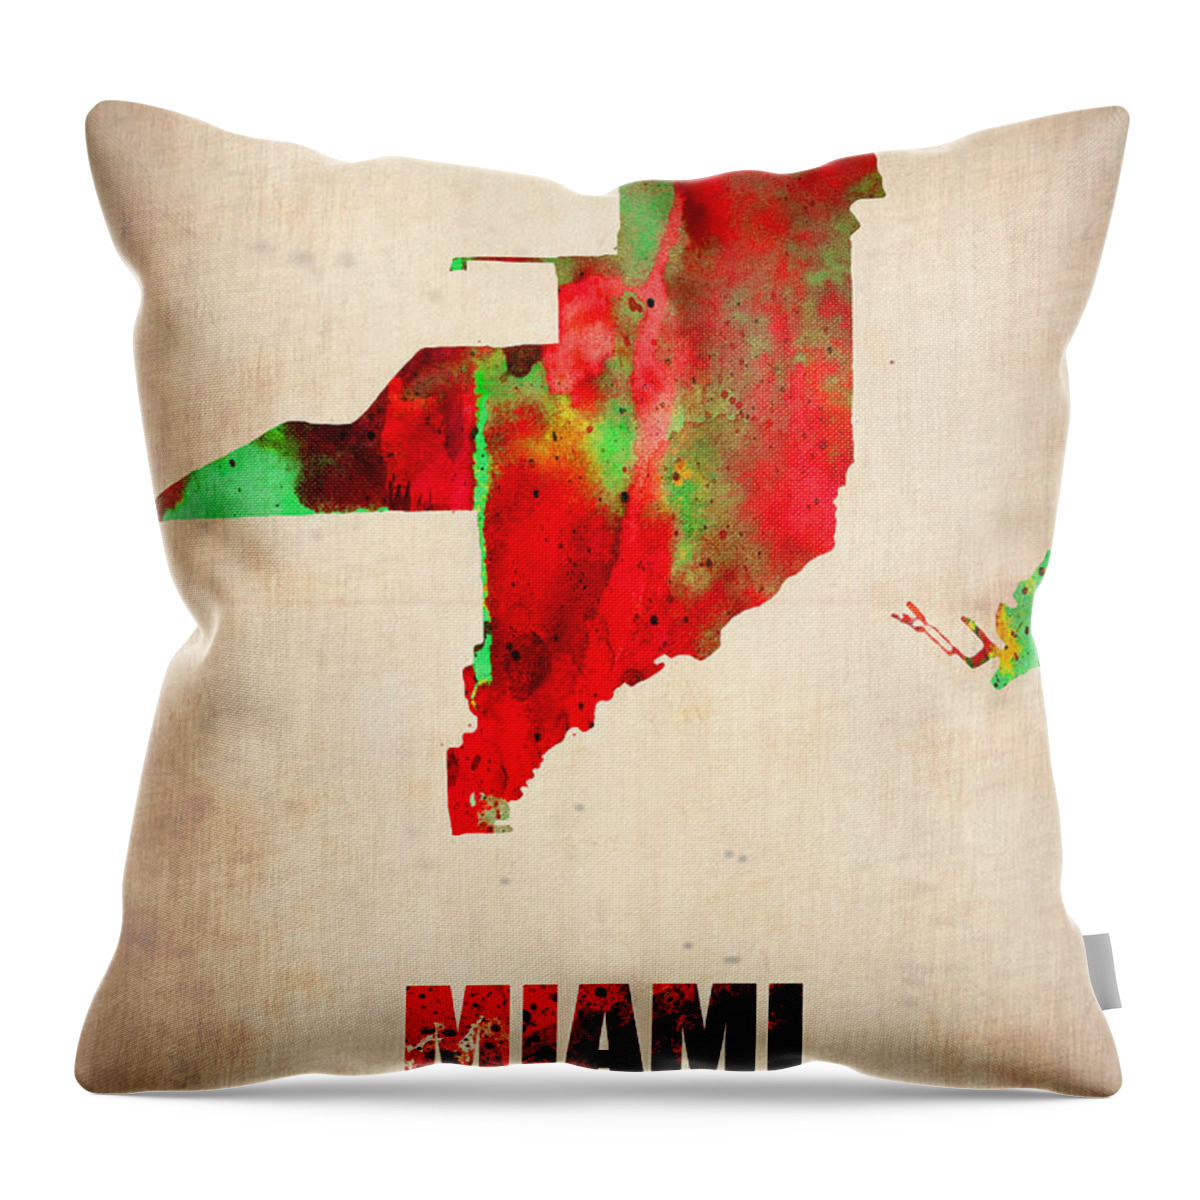 Miami Throw Pillow featuring the mixed media Miami Watercolor Map by Naxart Studio